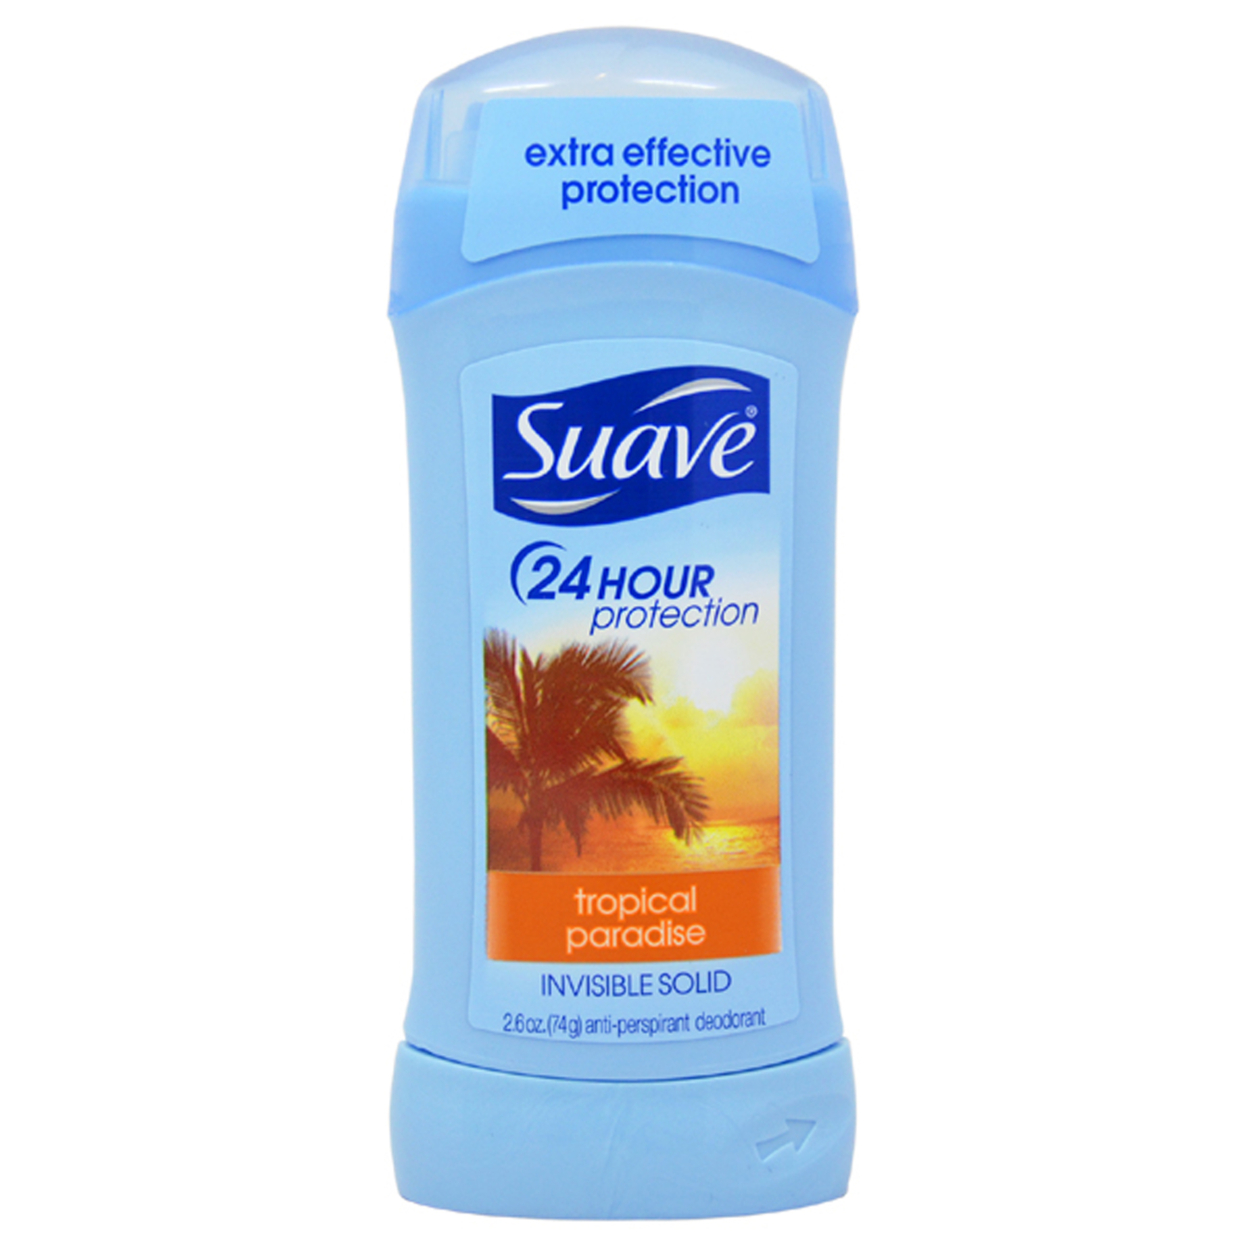 Suave Tropical Paradise Antiperspirant Deodorant, 2.6 oz - image 1 of 3